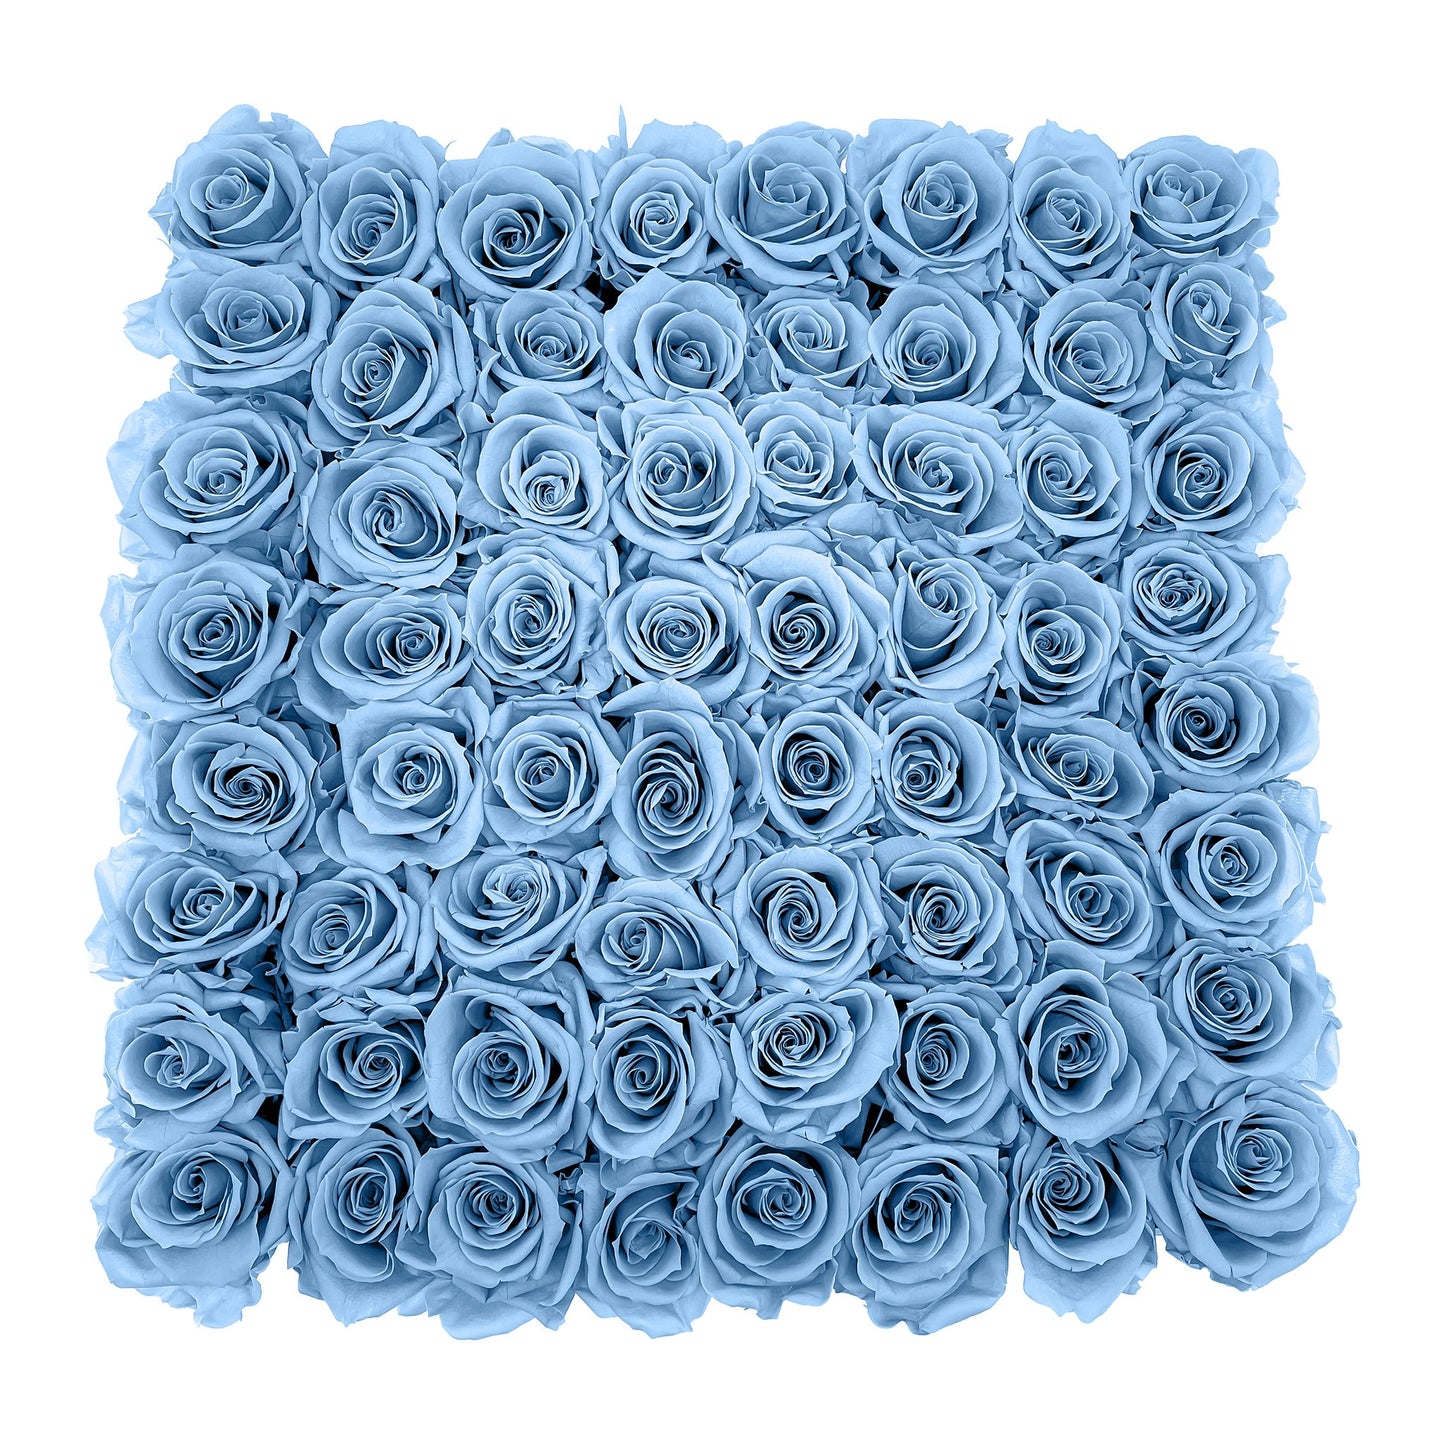 Preserved Roses Large Box | Light Blue - Roses